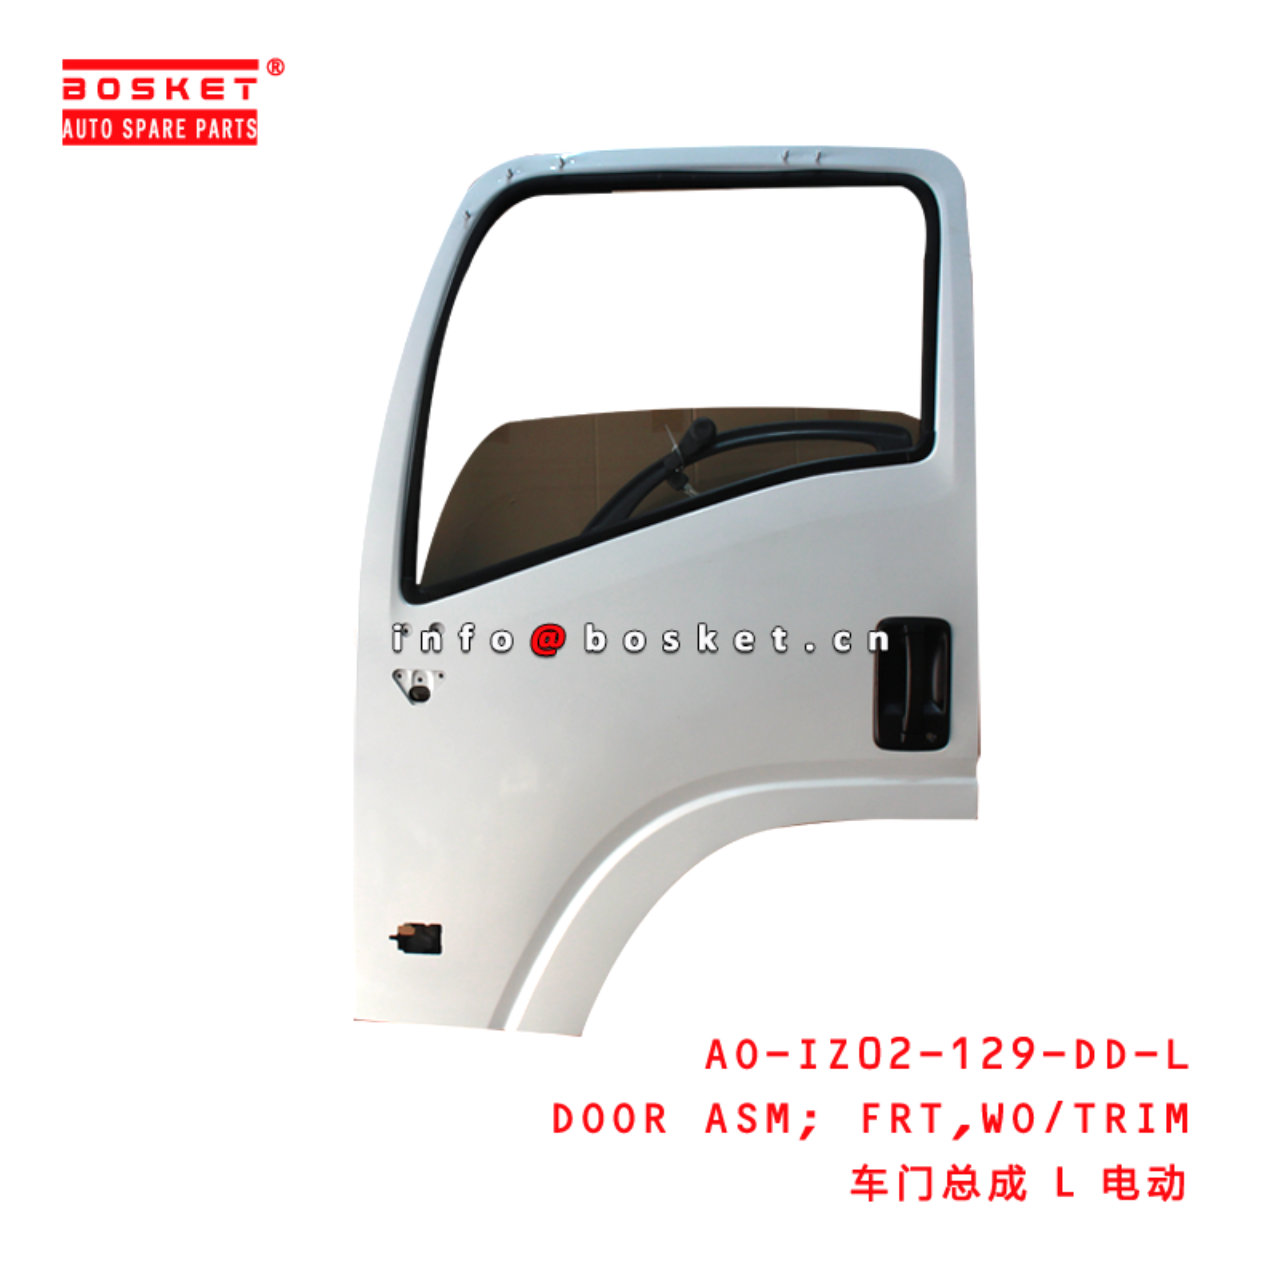 AO-IZ02-129-DD-L Without Trim Frt Door Assembly Suitable for ISUZU